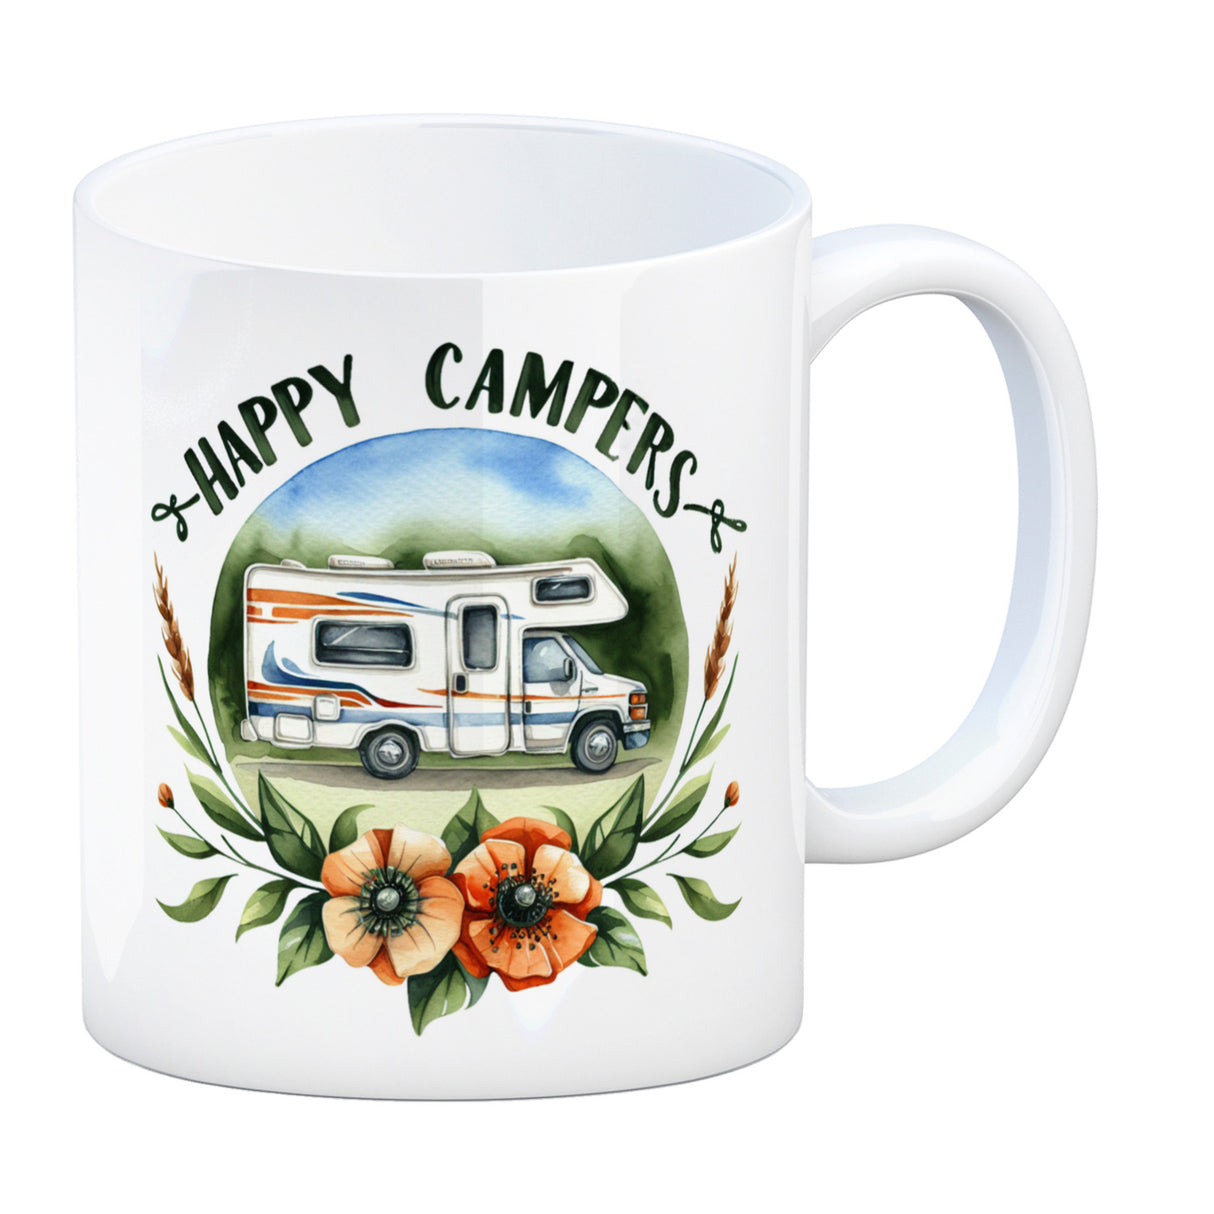 Wohnmobil Happy Campers Kaffeebecher